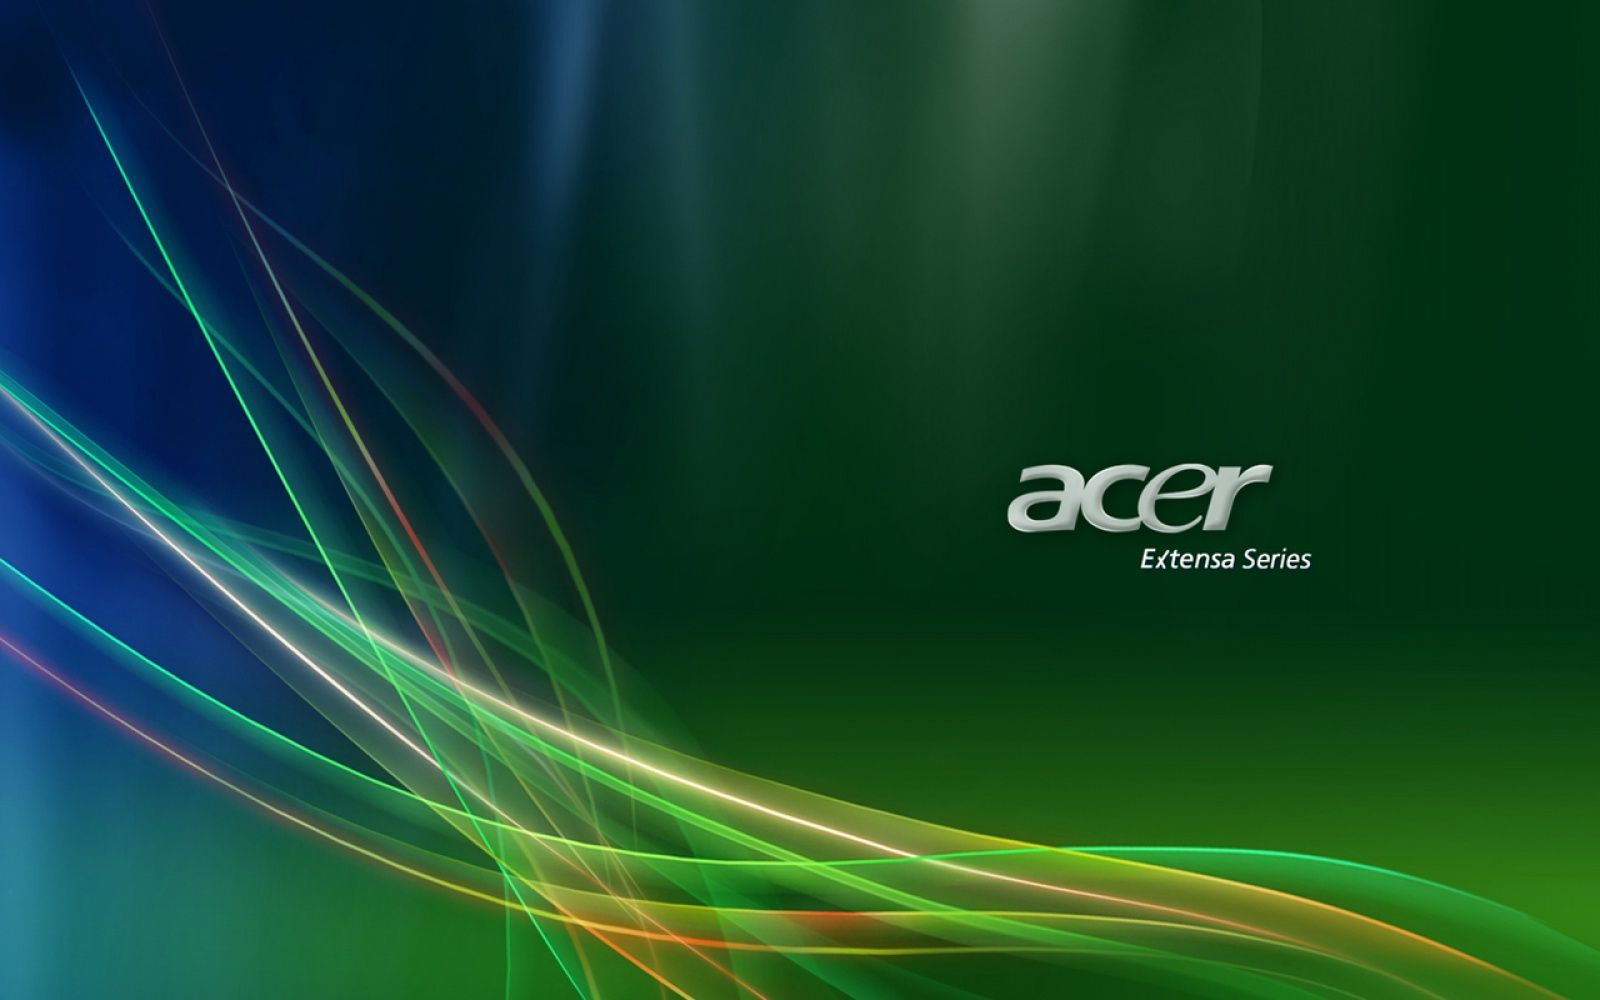 Acer Extensa Series Desktop Pc And Mac Wallpaper - Fondos De Pantalla Acer - HD Wallpaper 